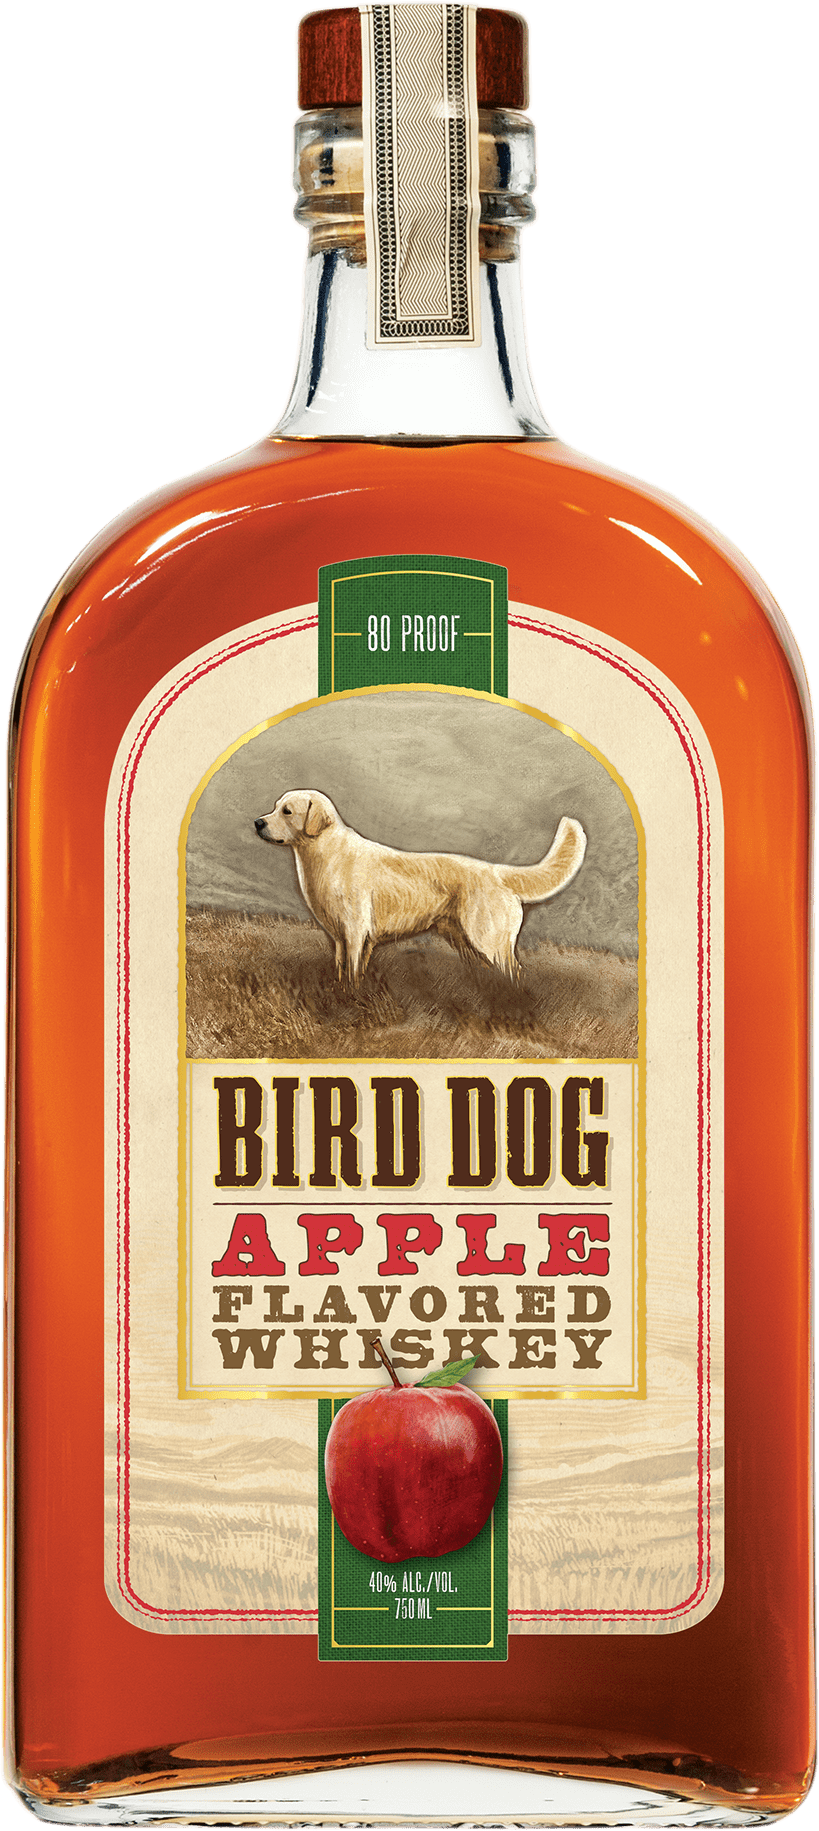 Bottle of Bird Dog Apple Whiskey